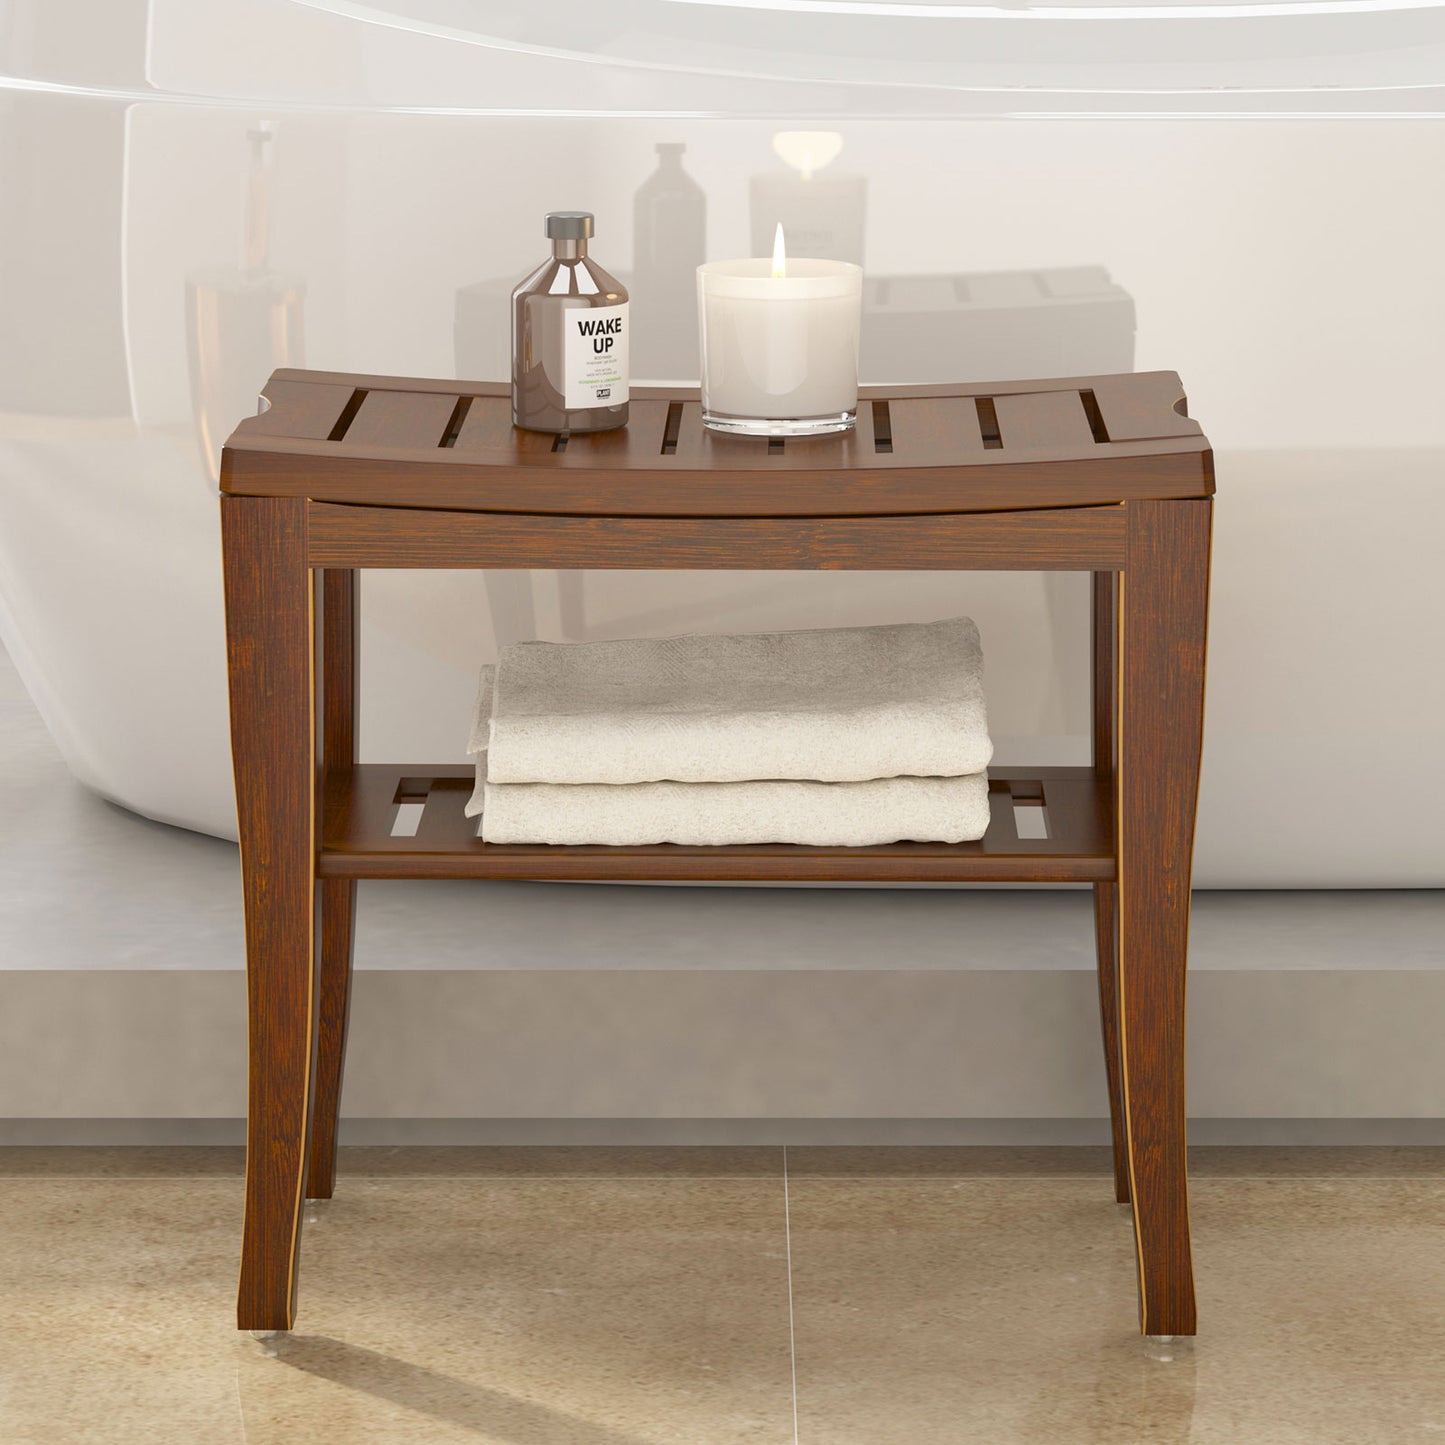 SogesPower Bathroom Bench Bamboo Wood Shower Stool Non-slip Waterproof Shower Seat with Storage Shelf